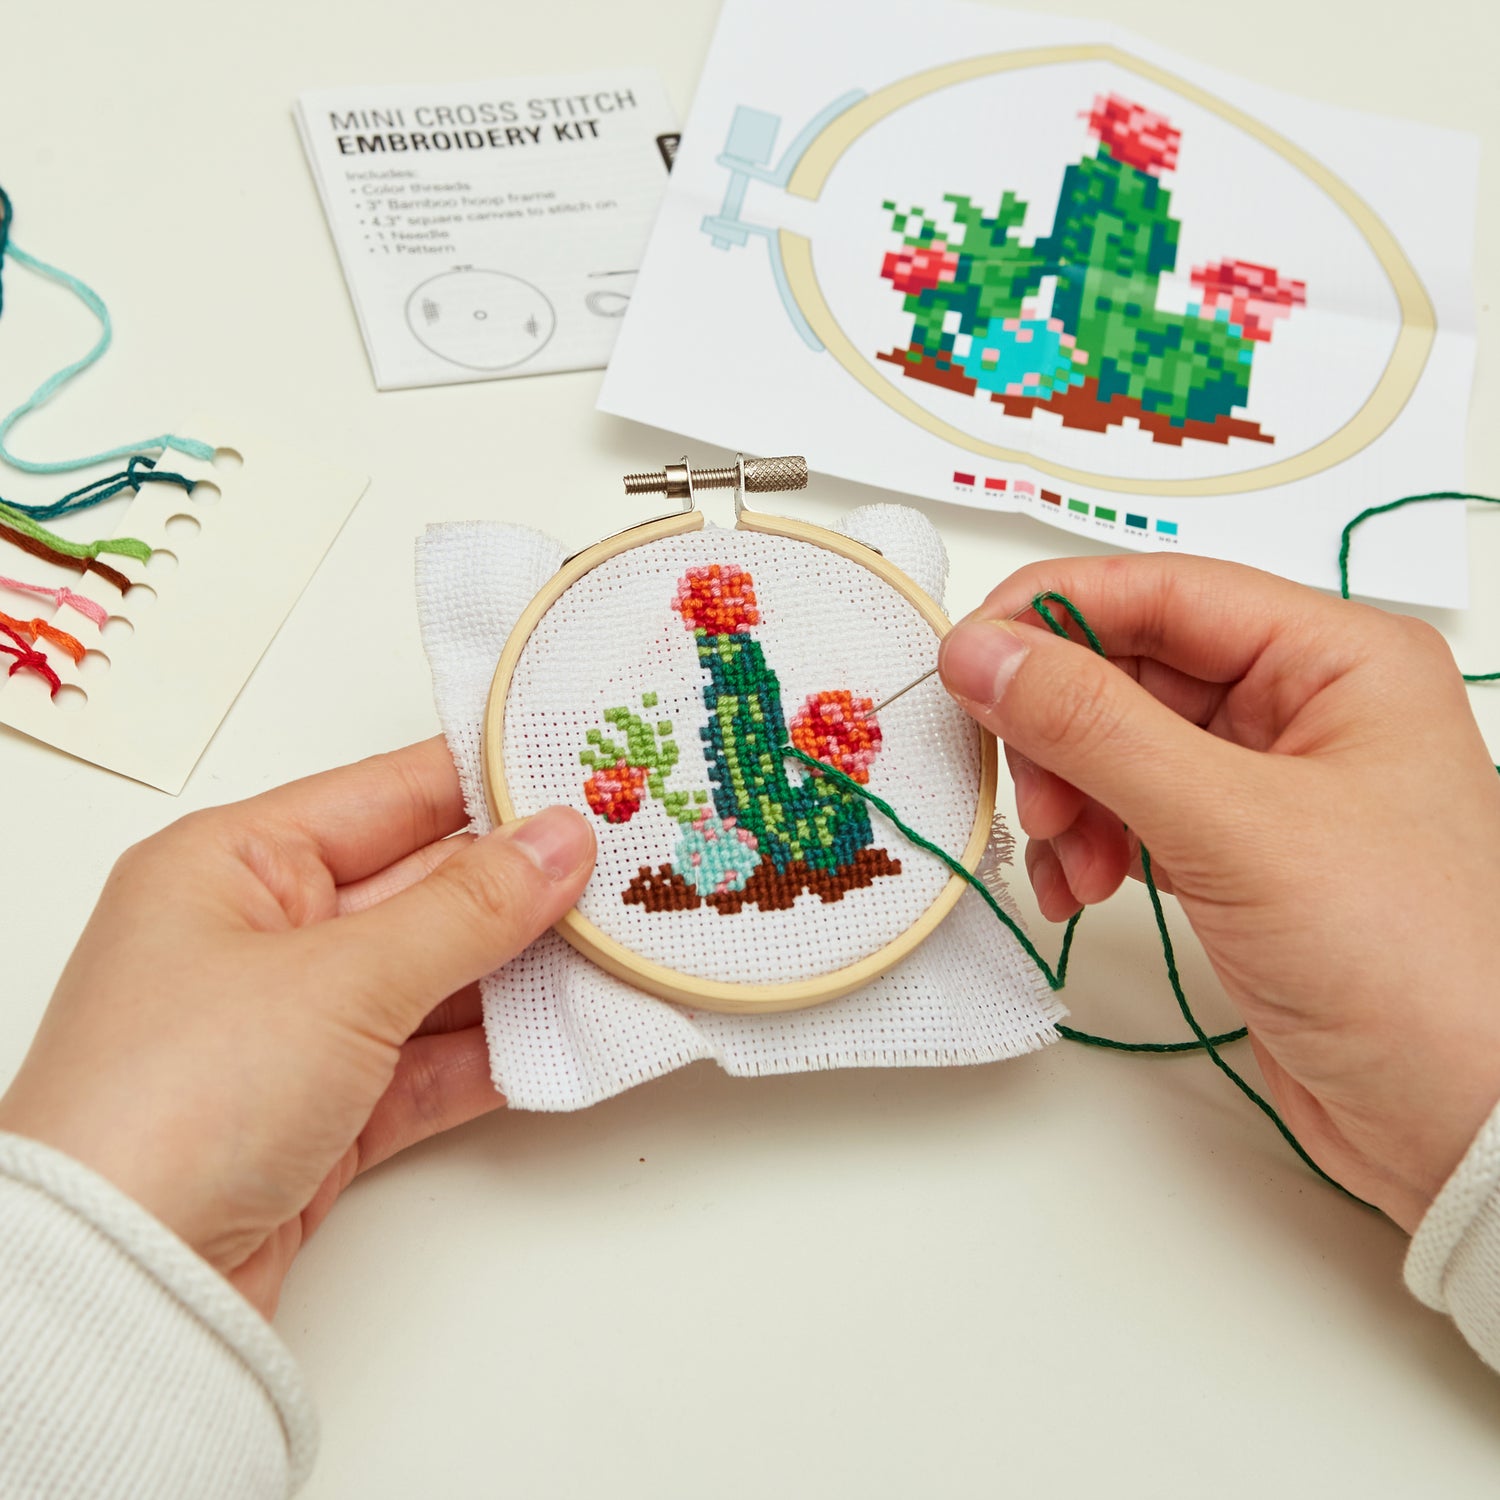 Kikkerland Mini Cross Stitch Embroidery Kit - Mushroom